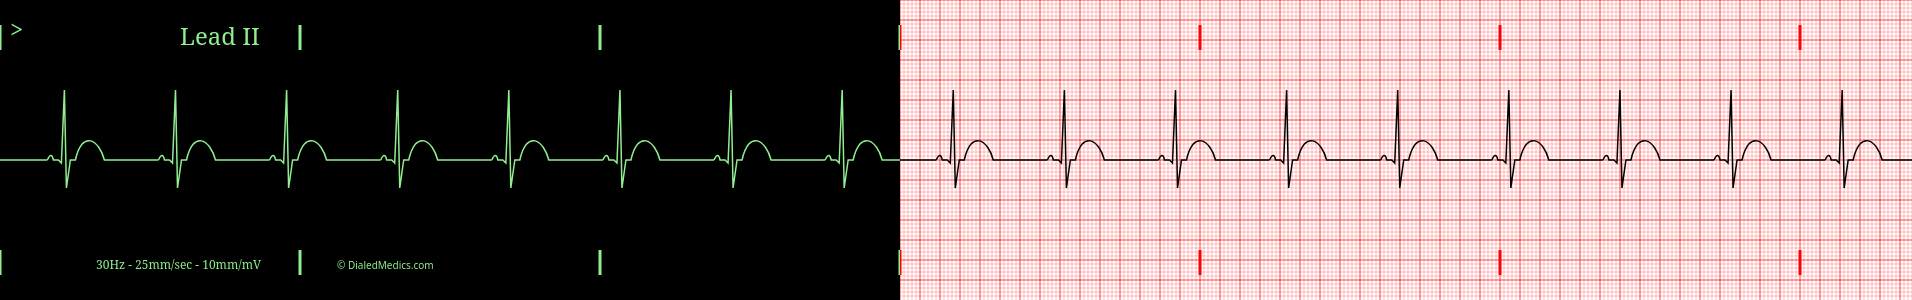 Sinus Bradycardia EKG example, split printout / monitor display.